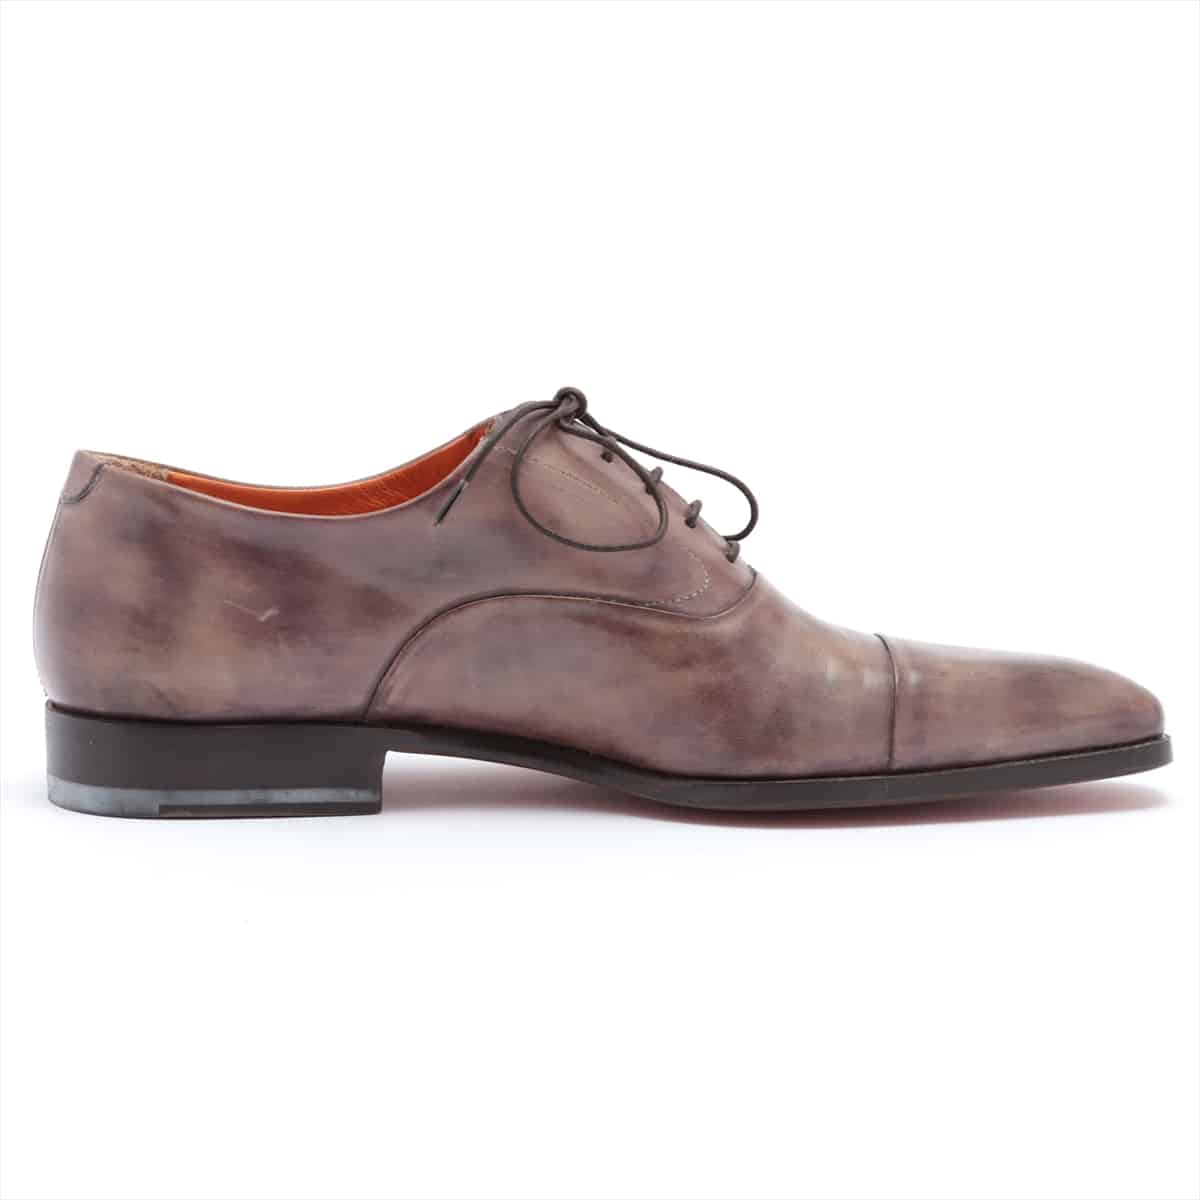 Santoni Leather Leather shoes 6 1/2 Men's Brown